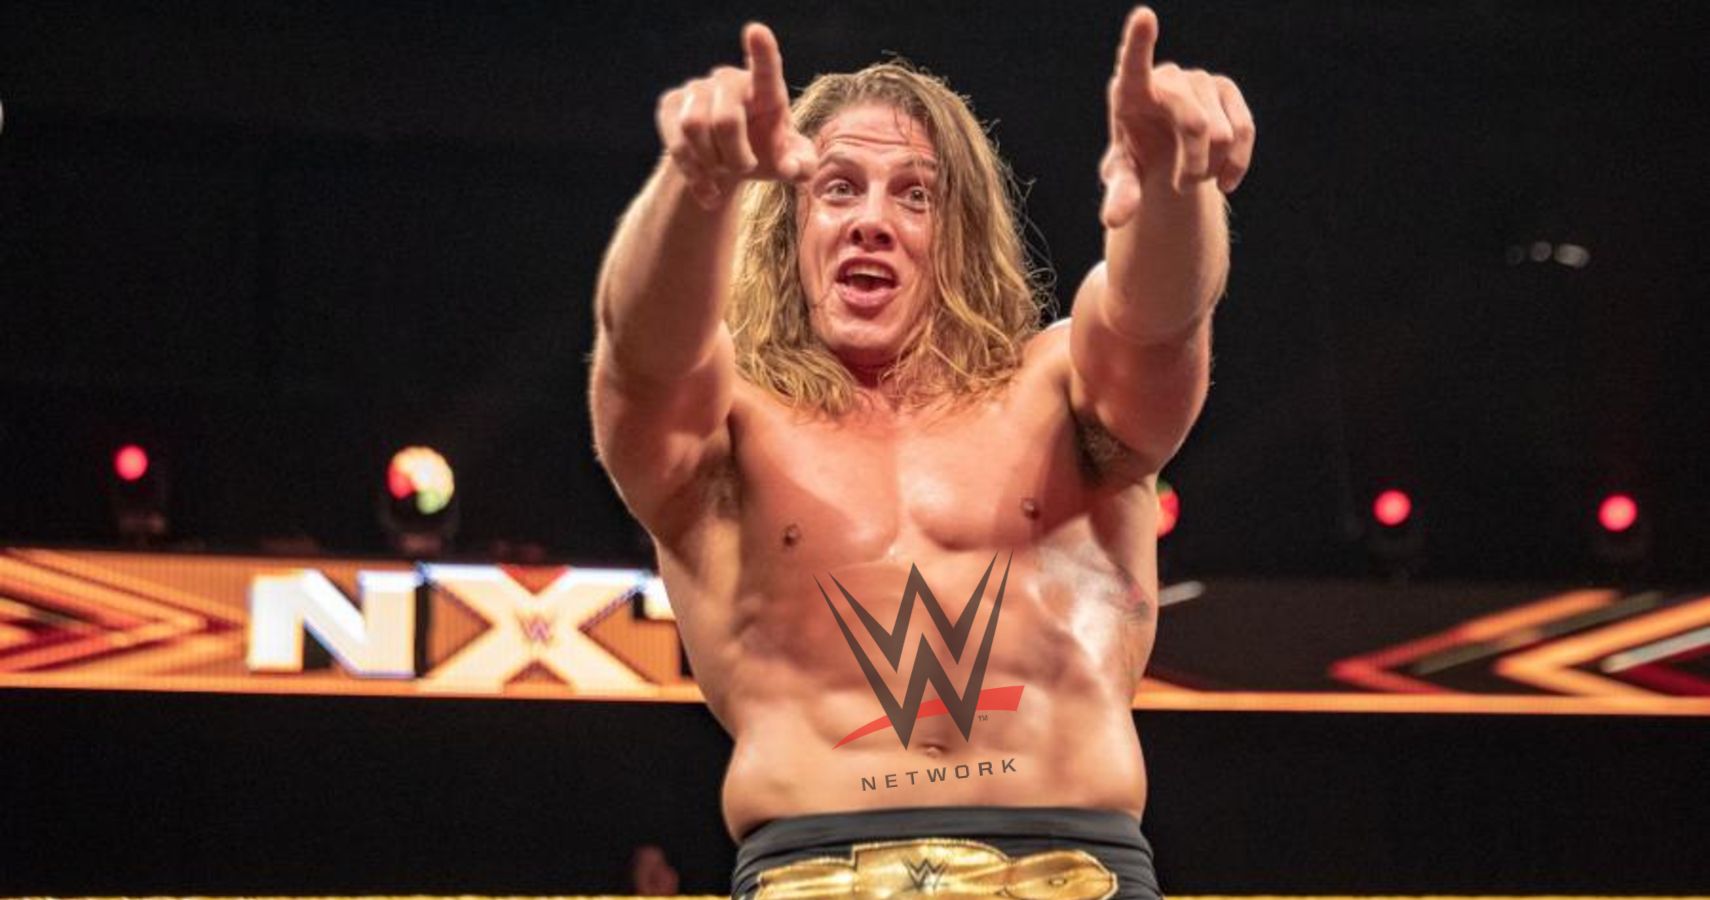 WWE Raw Superstar Riddle (aka Matt Riddle) during his NXT days